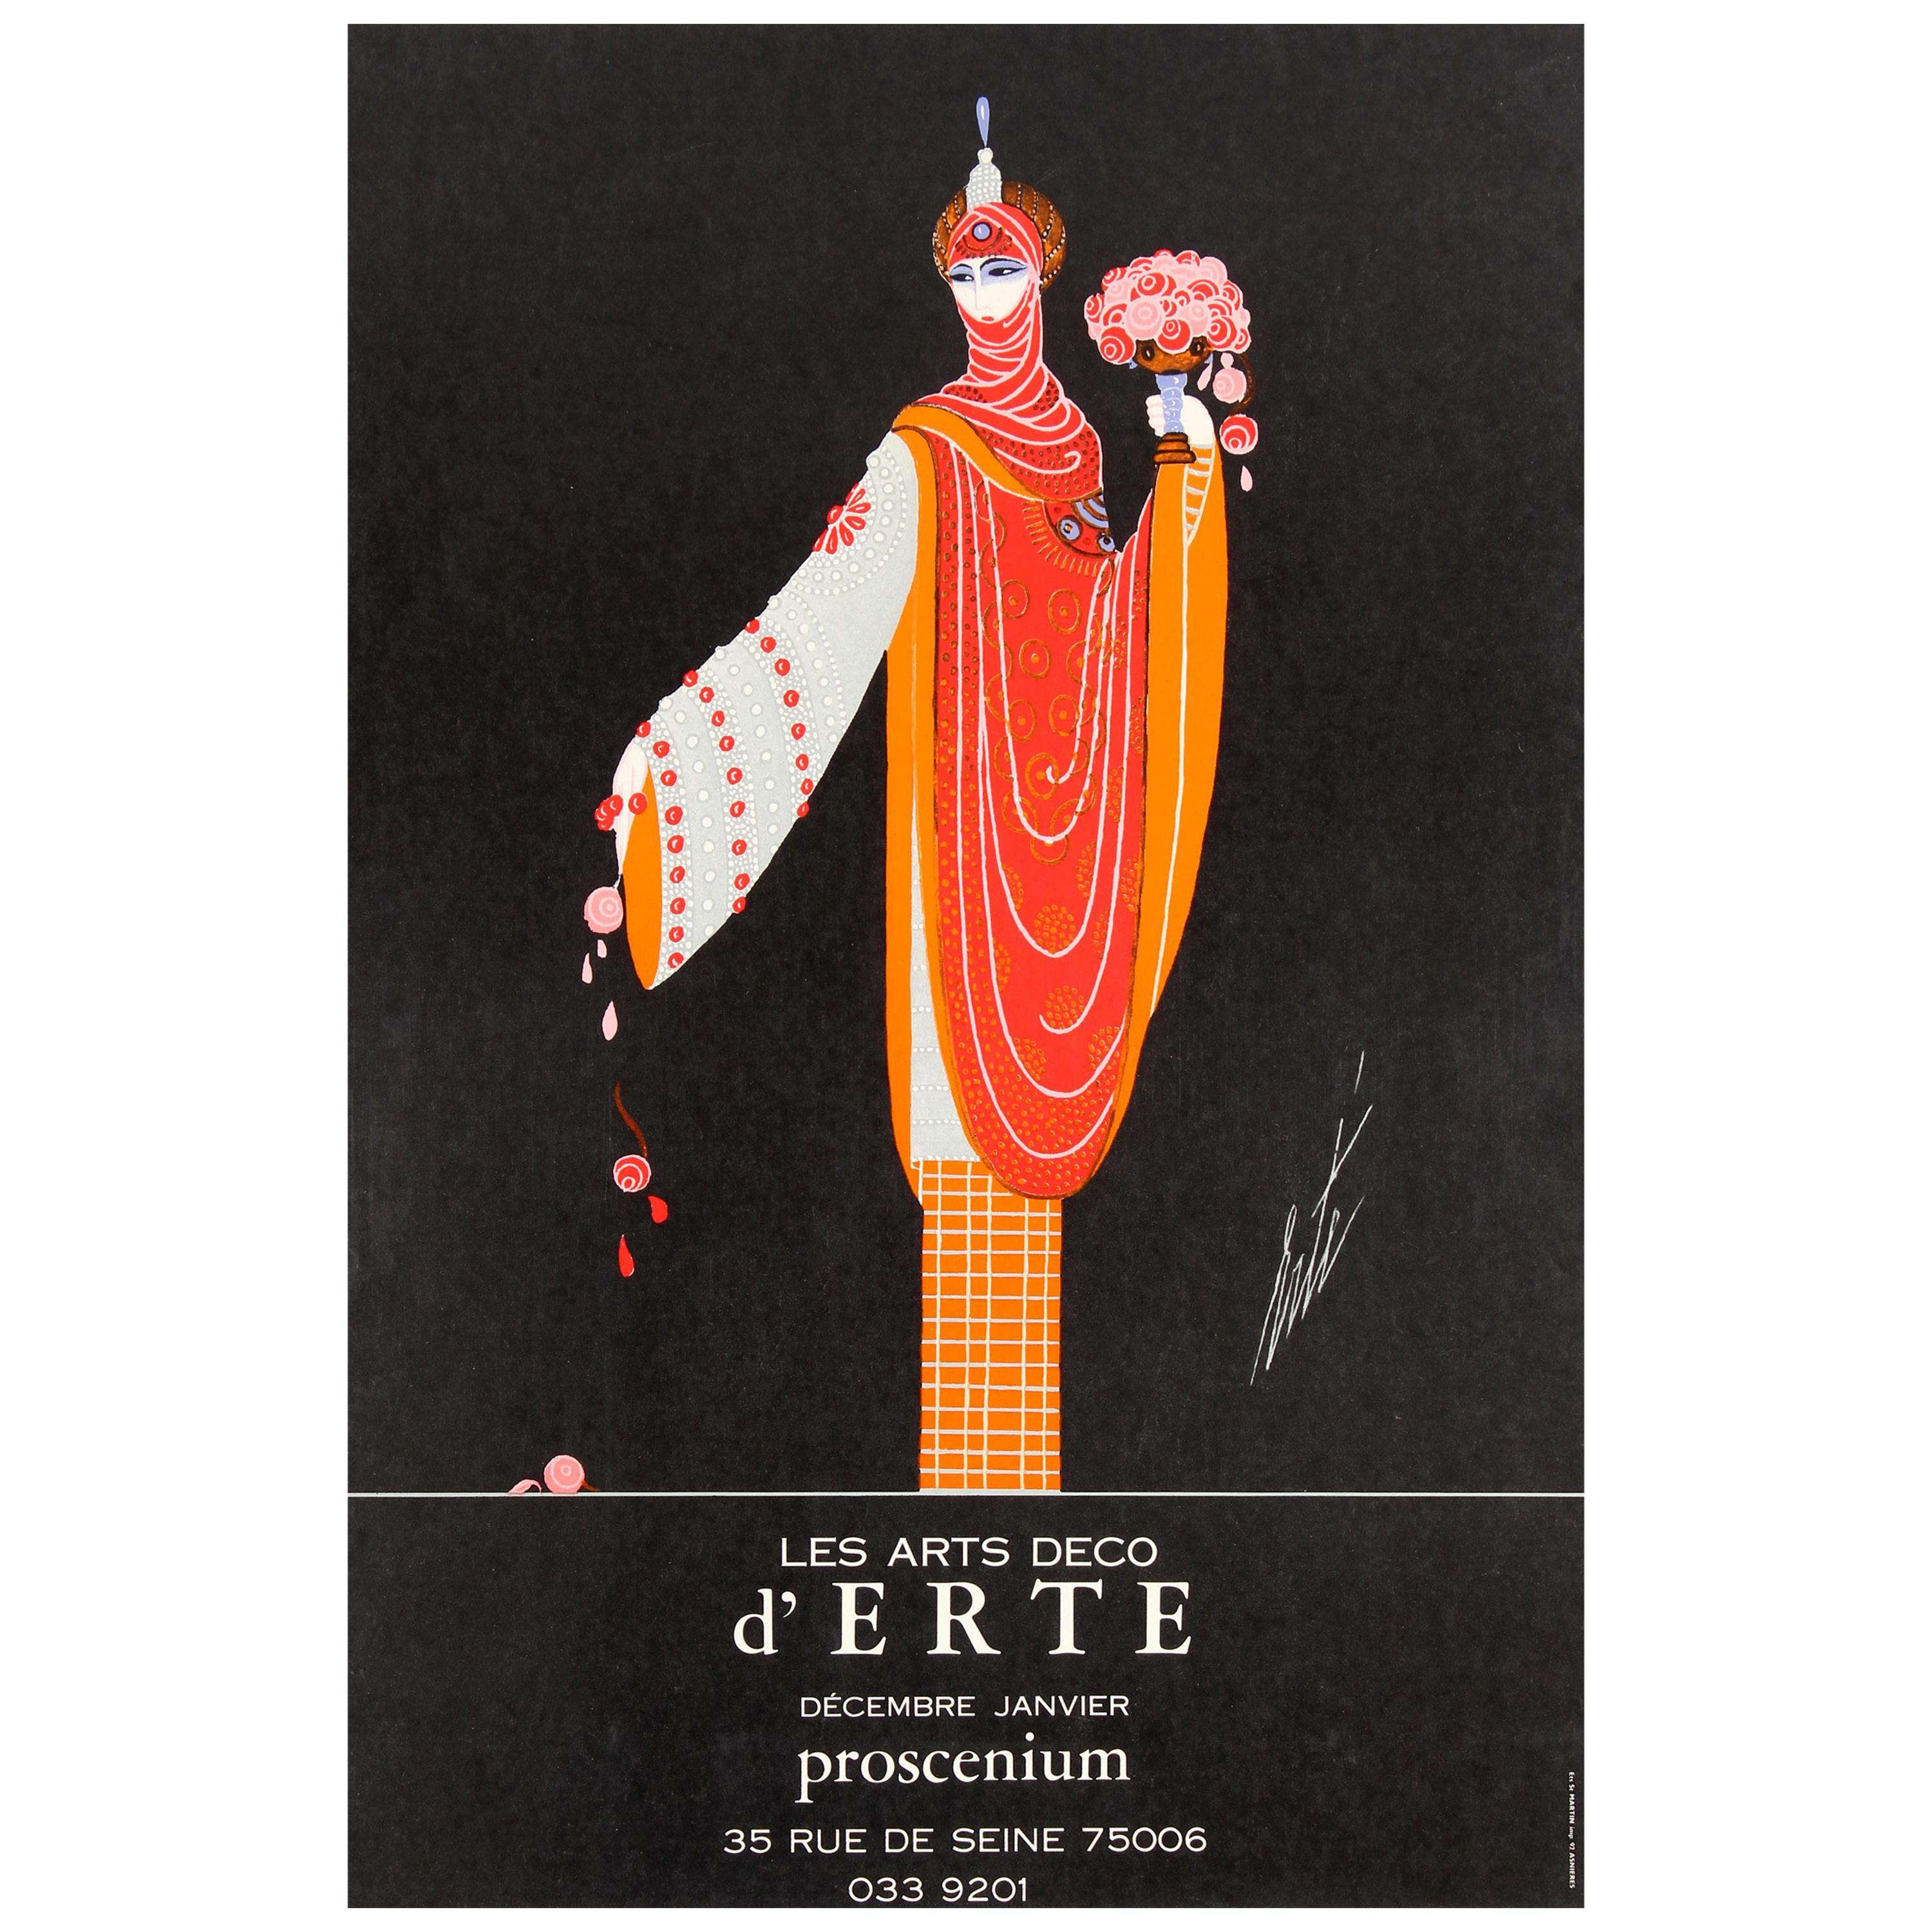 Original Vintage Decorative Art Deco Style Poster for Erte Exhibition Proscenium